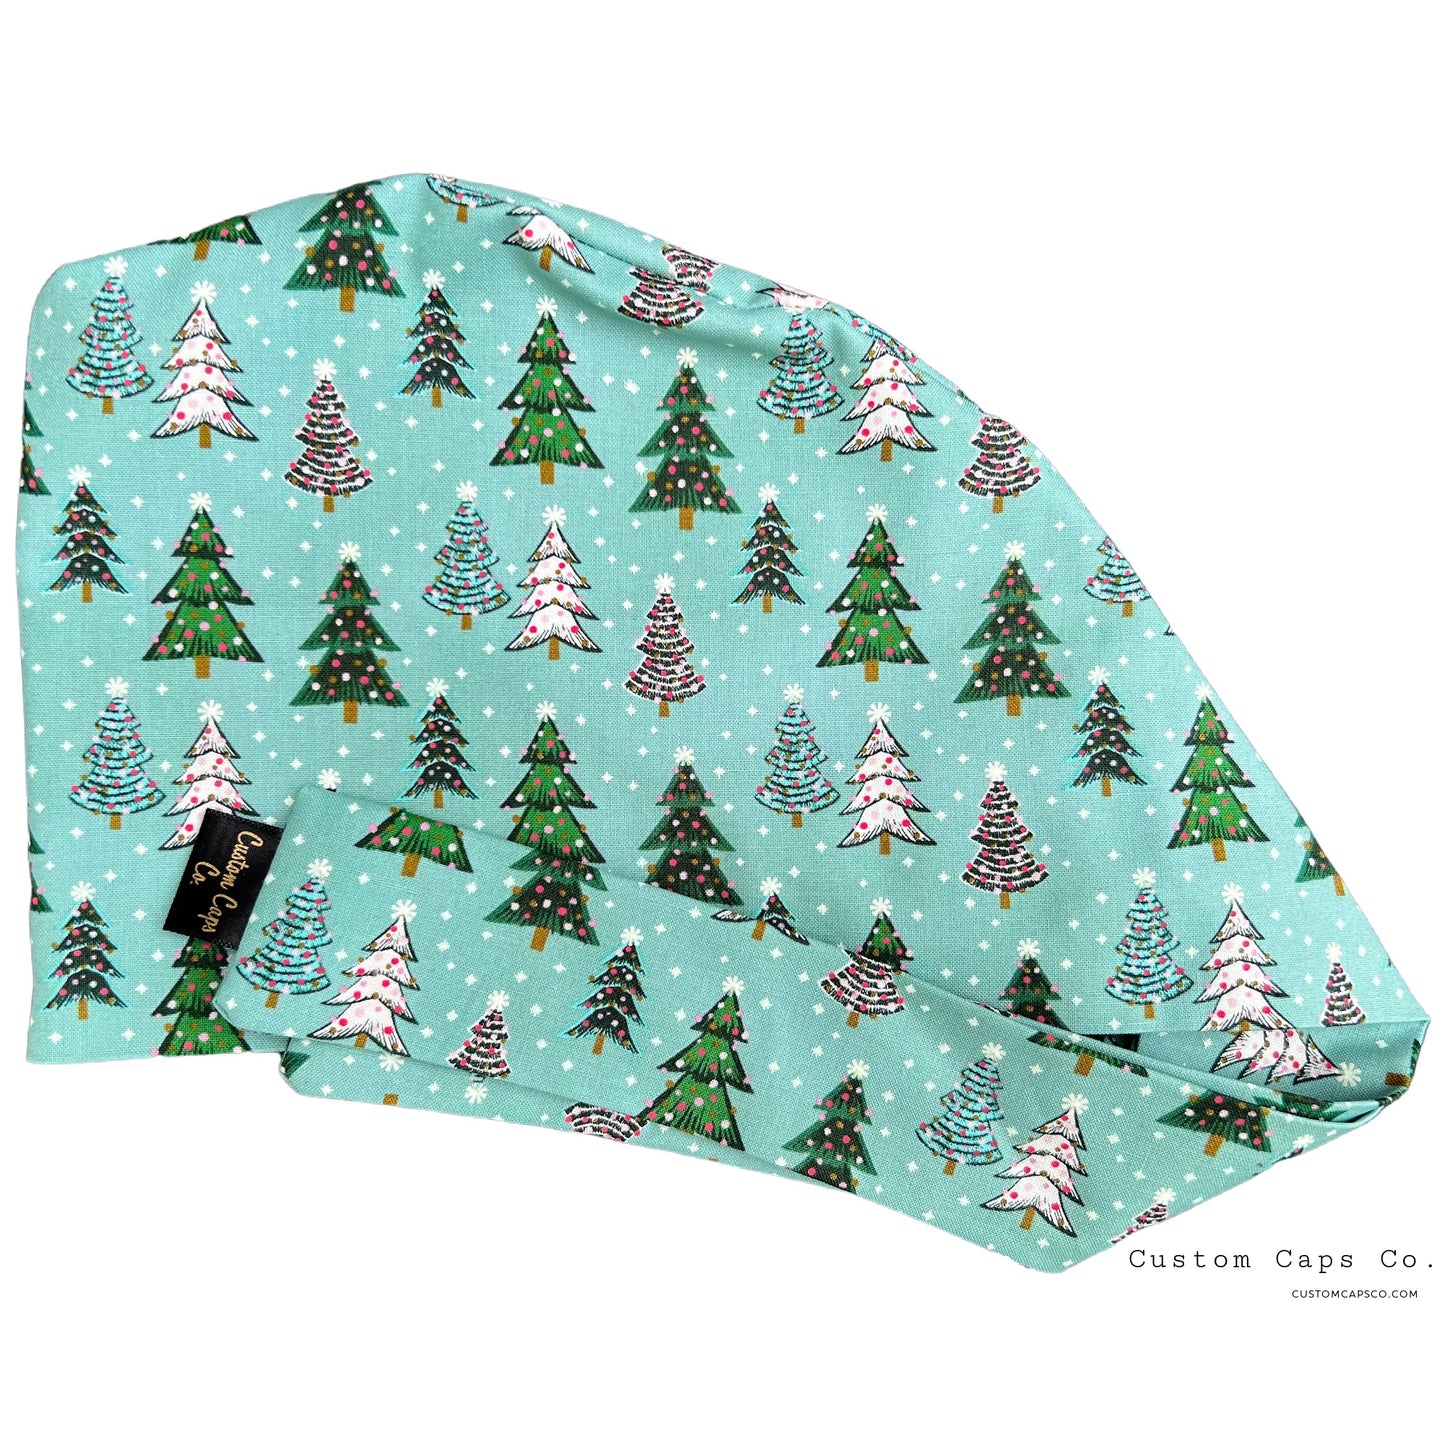 Little Christmas Trees | Pixie - Custom Caps Co. 